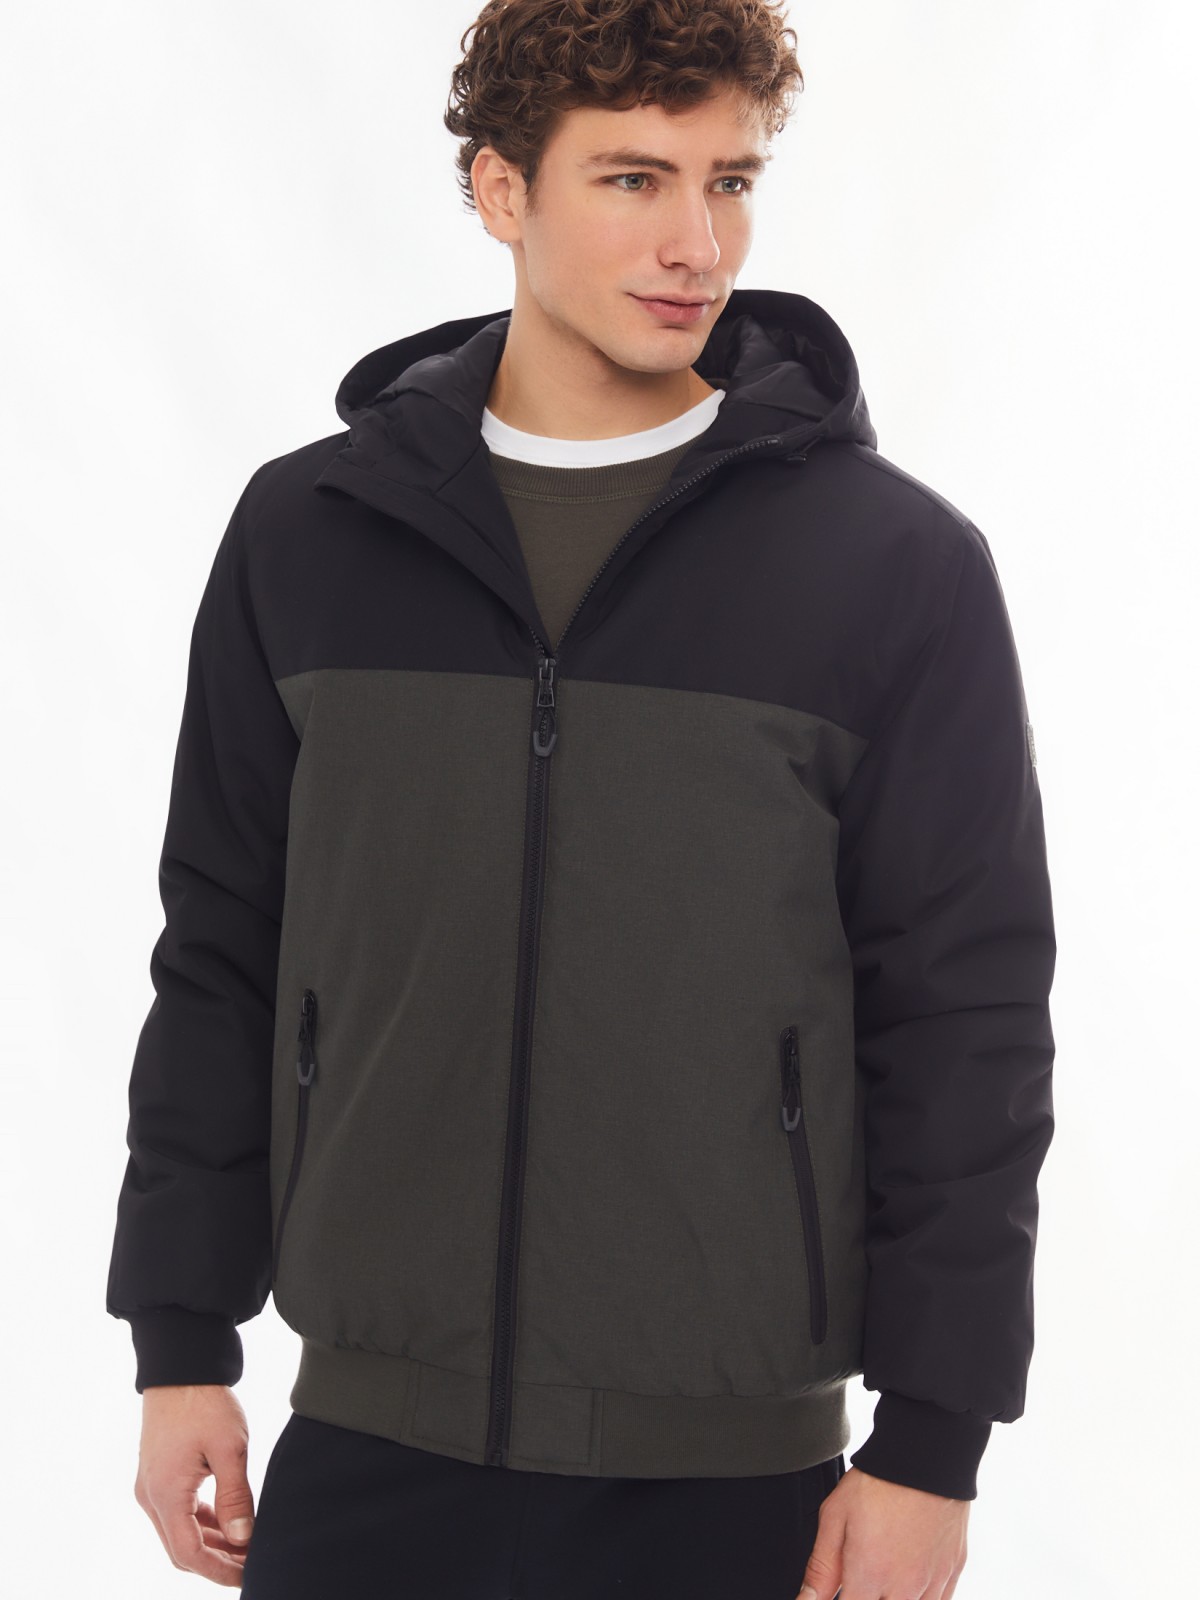 Утеплённая куртка-бомбер на синтепоне с капюшоном zolla 01412510L034, цвет хаки, размер M - фото 4